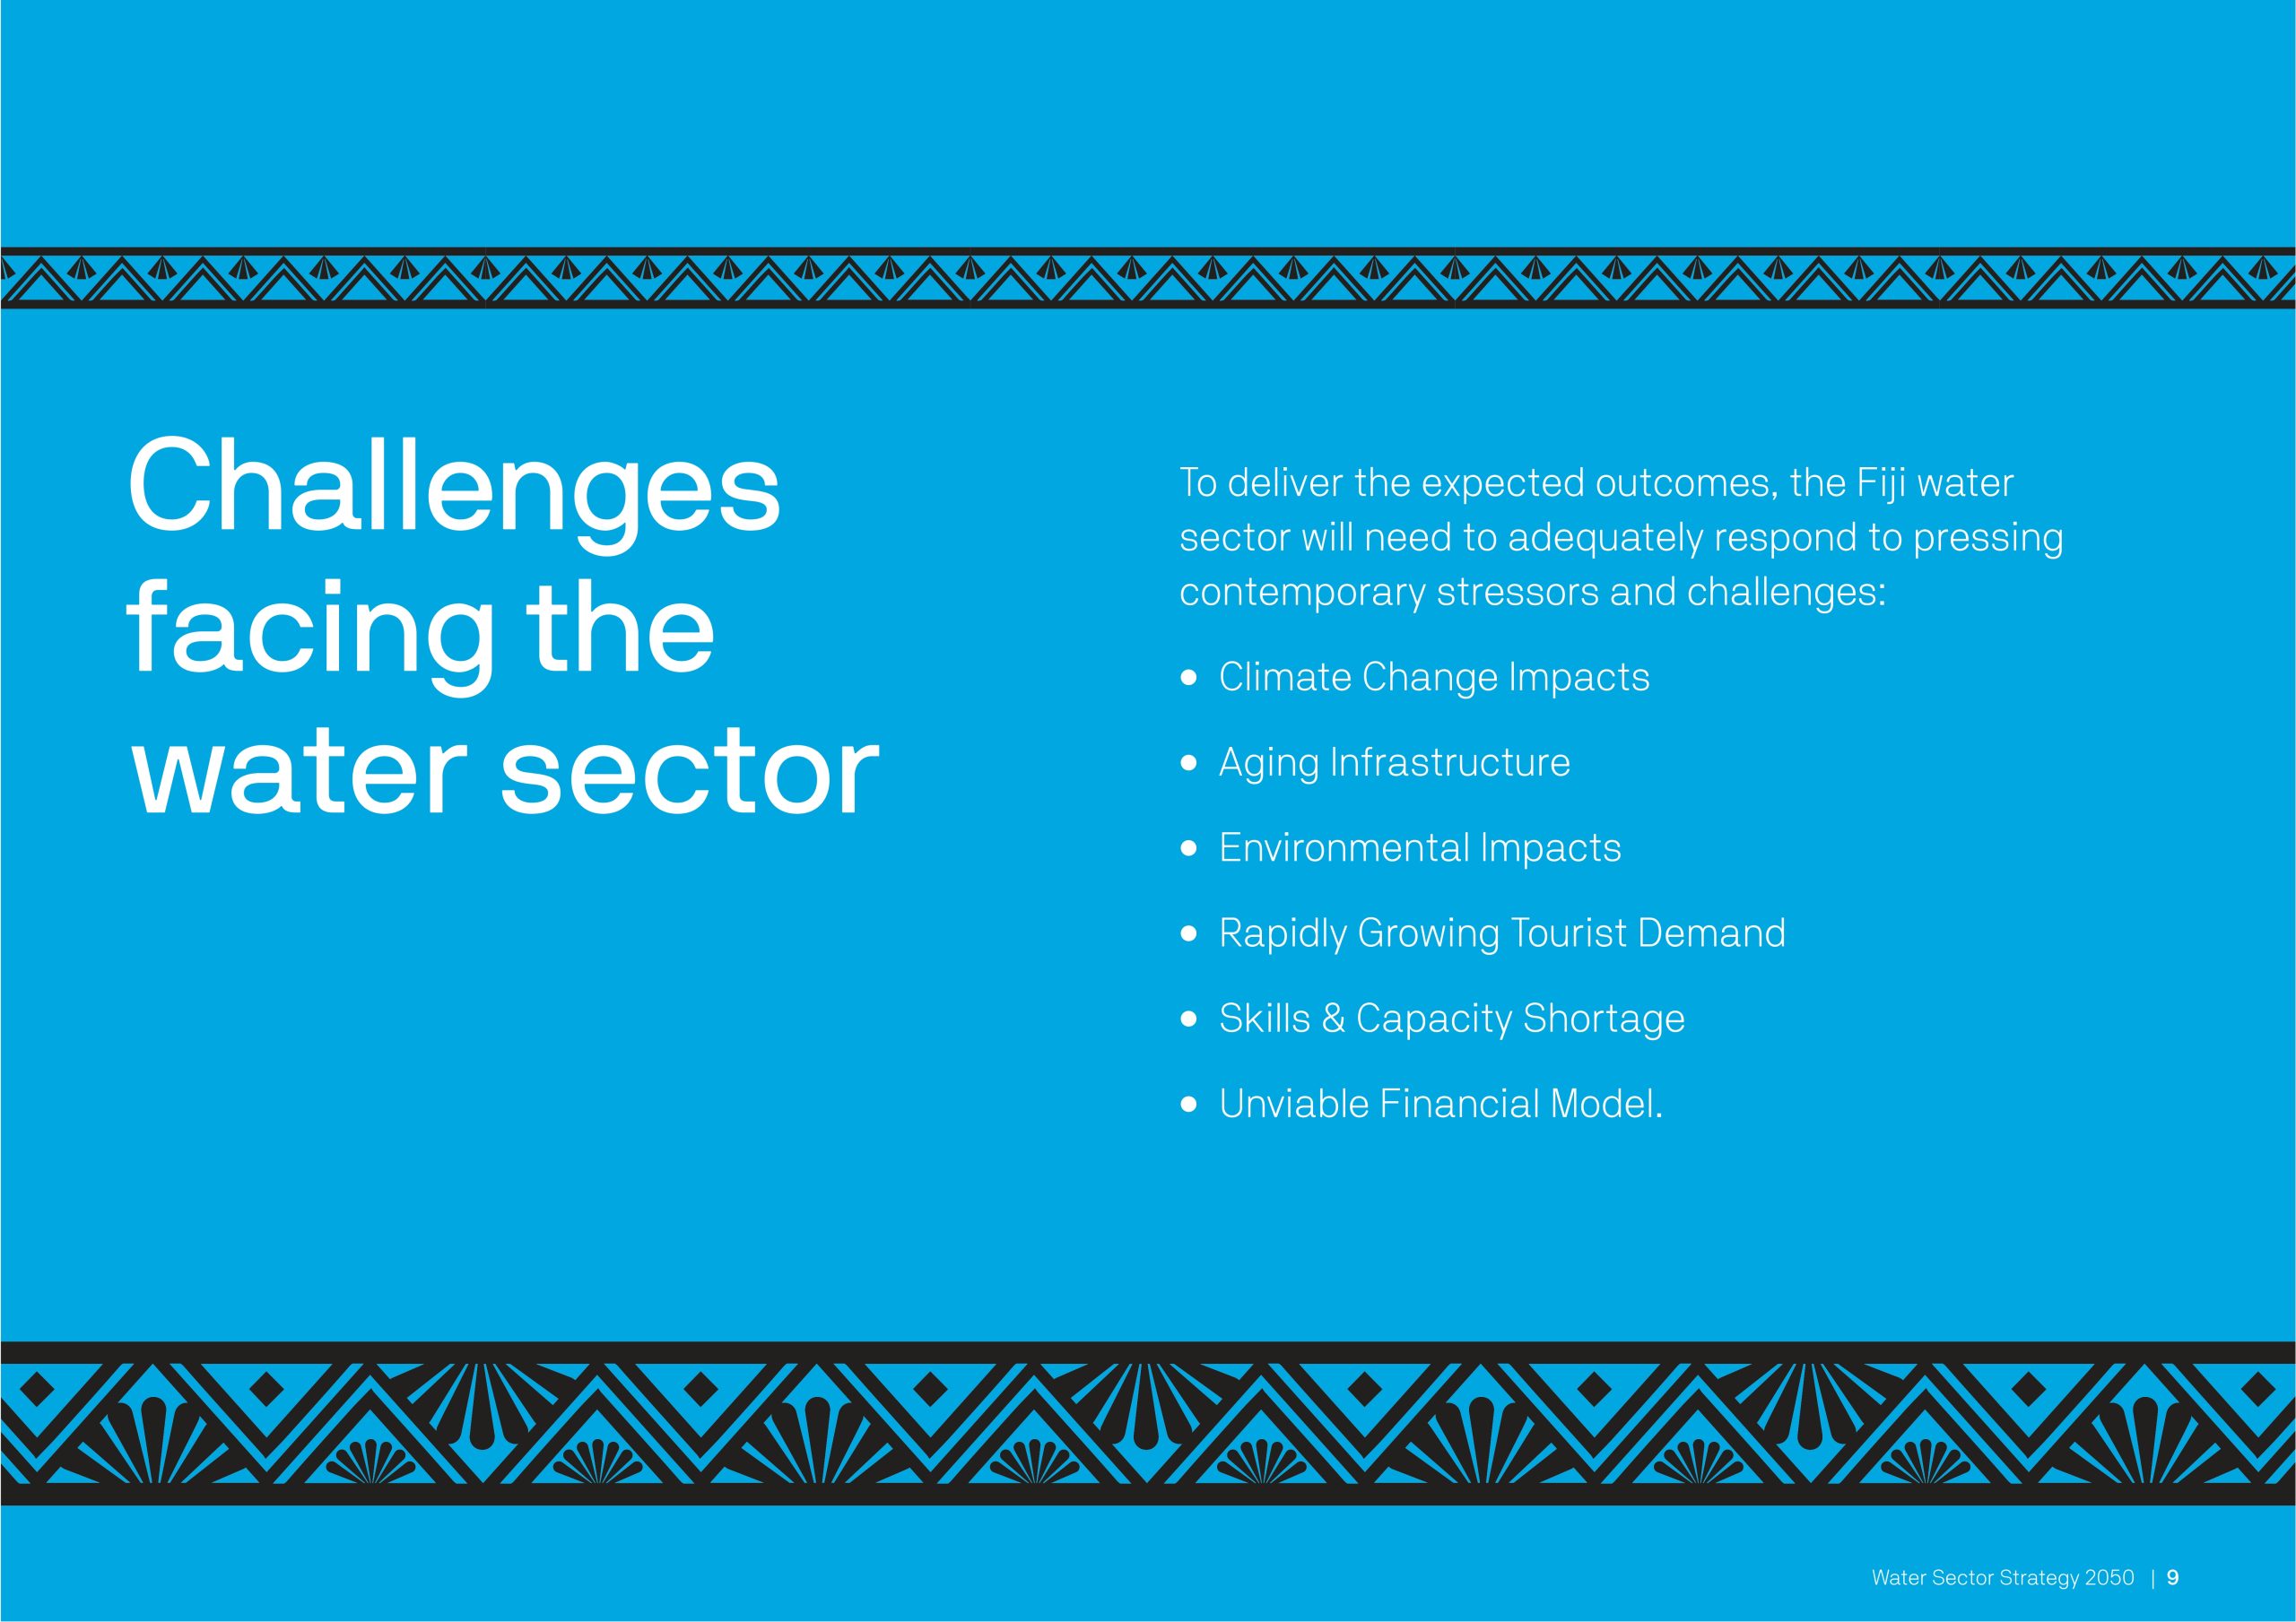 Fiji-Water-Sector-Strategy-2050_009